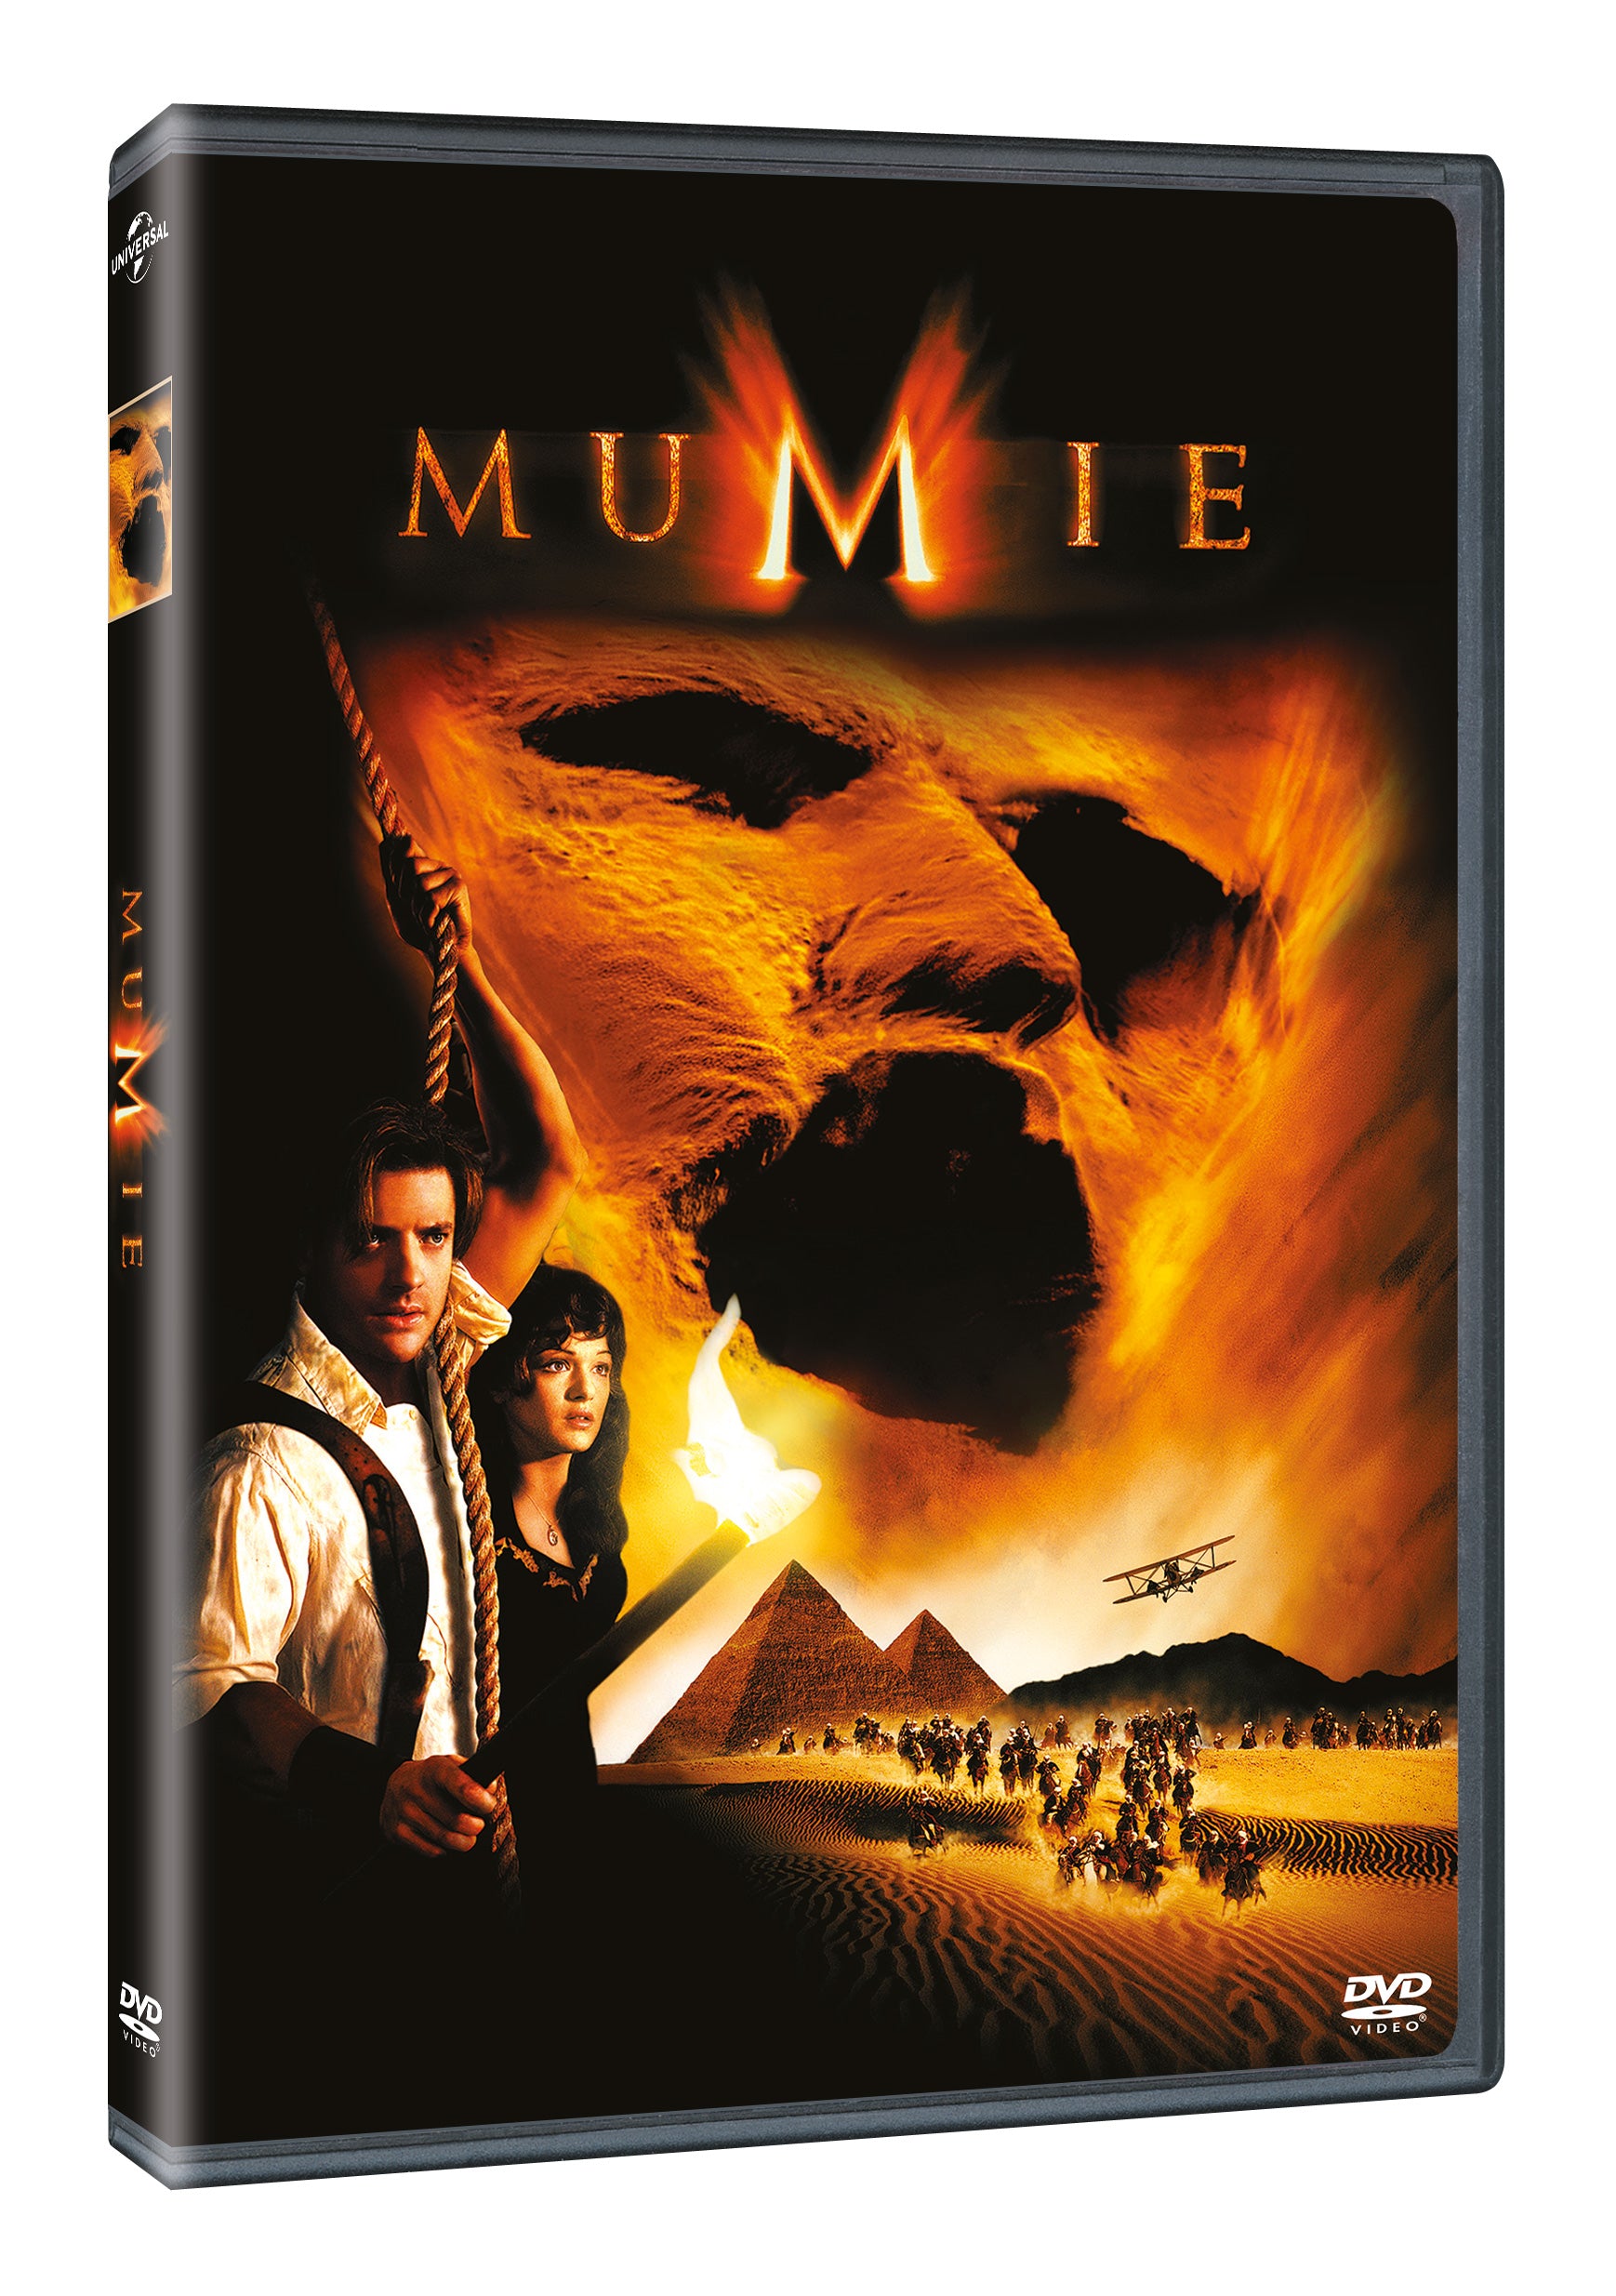 Mumie DVD (1999) / The Mummy